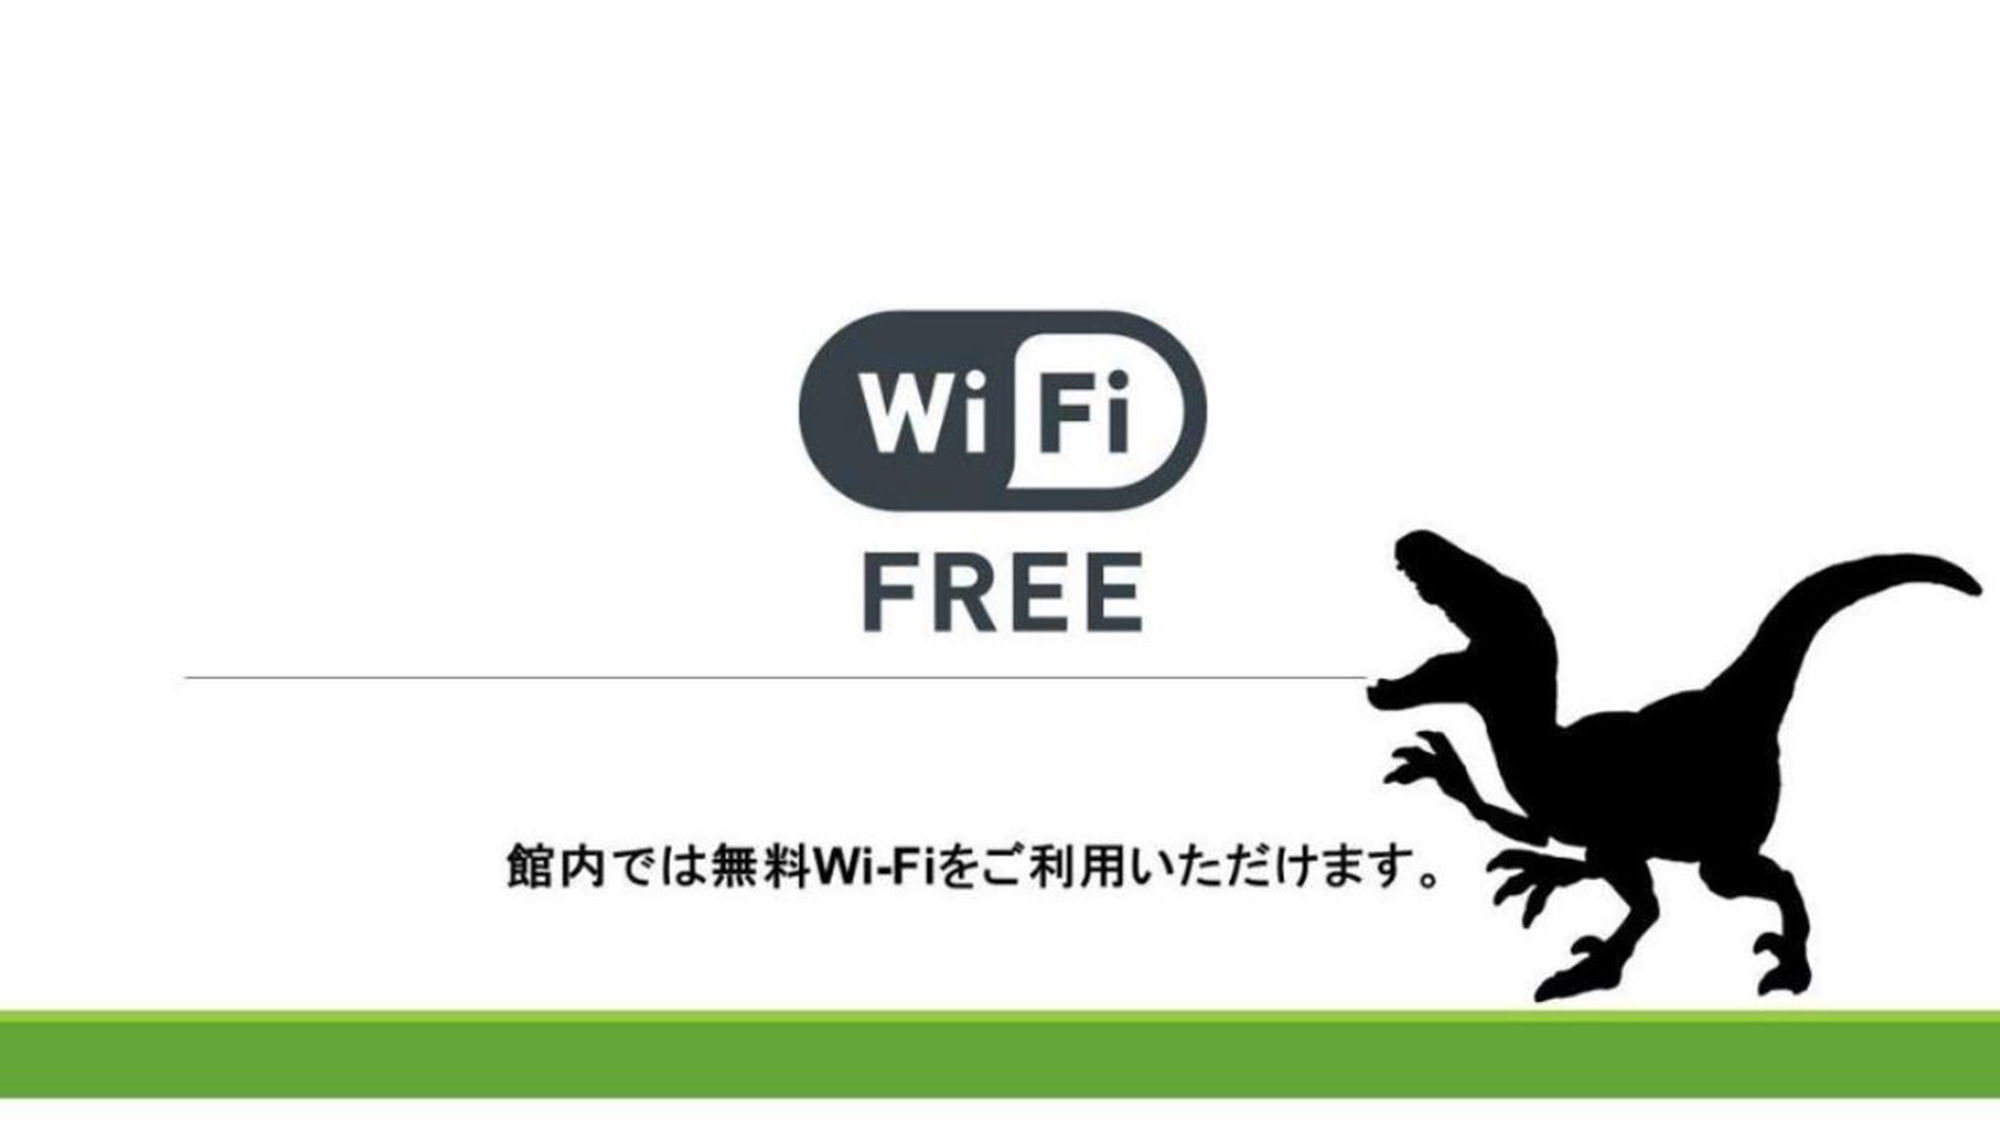 Free Wi-Fi館内では無料Wi-Fiをご利用いただけます。